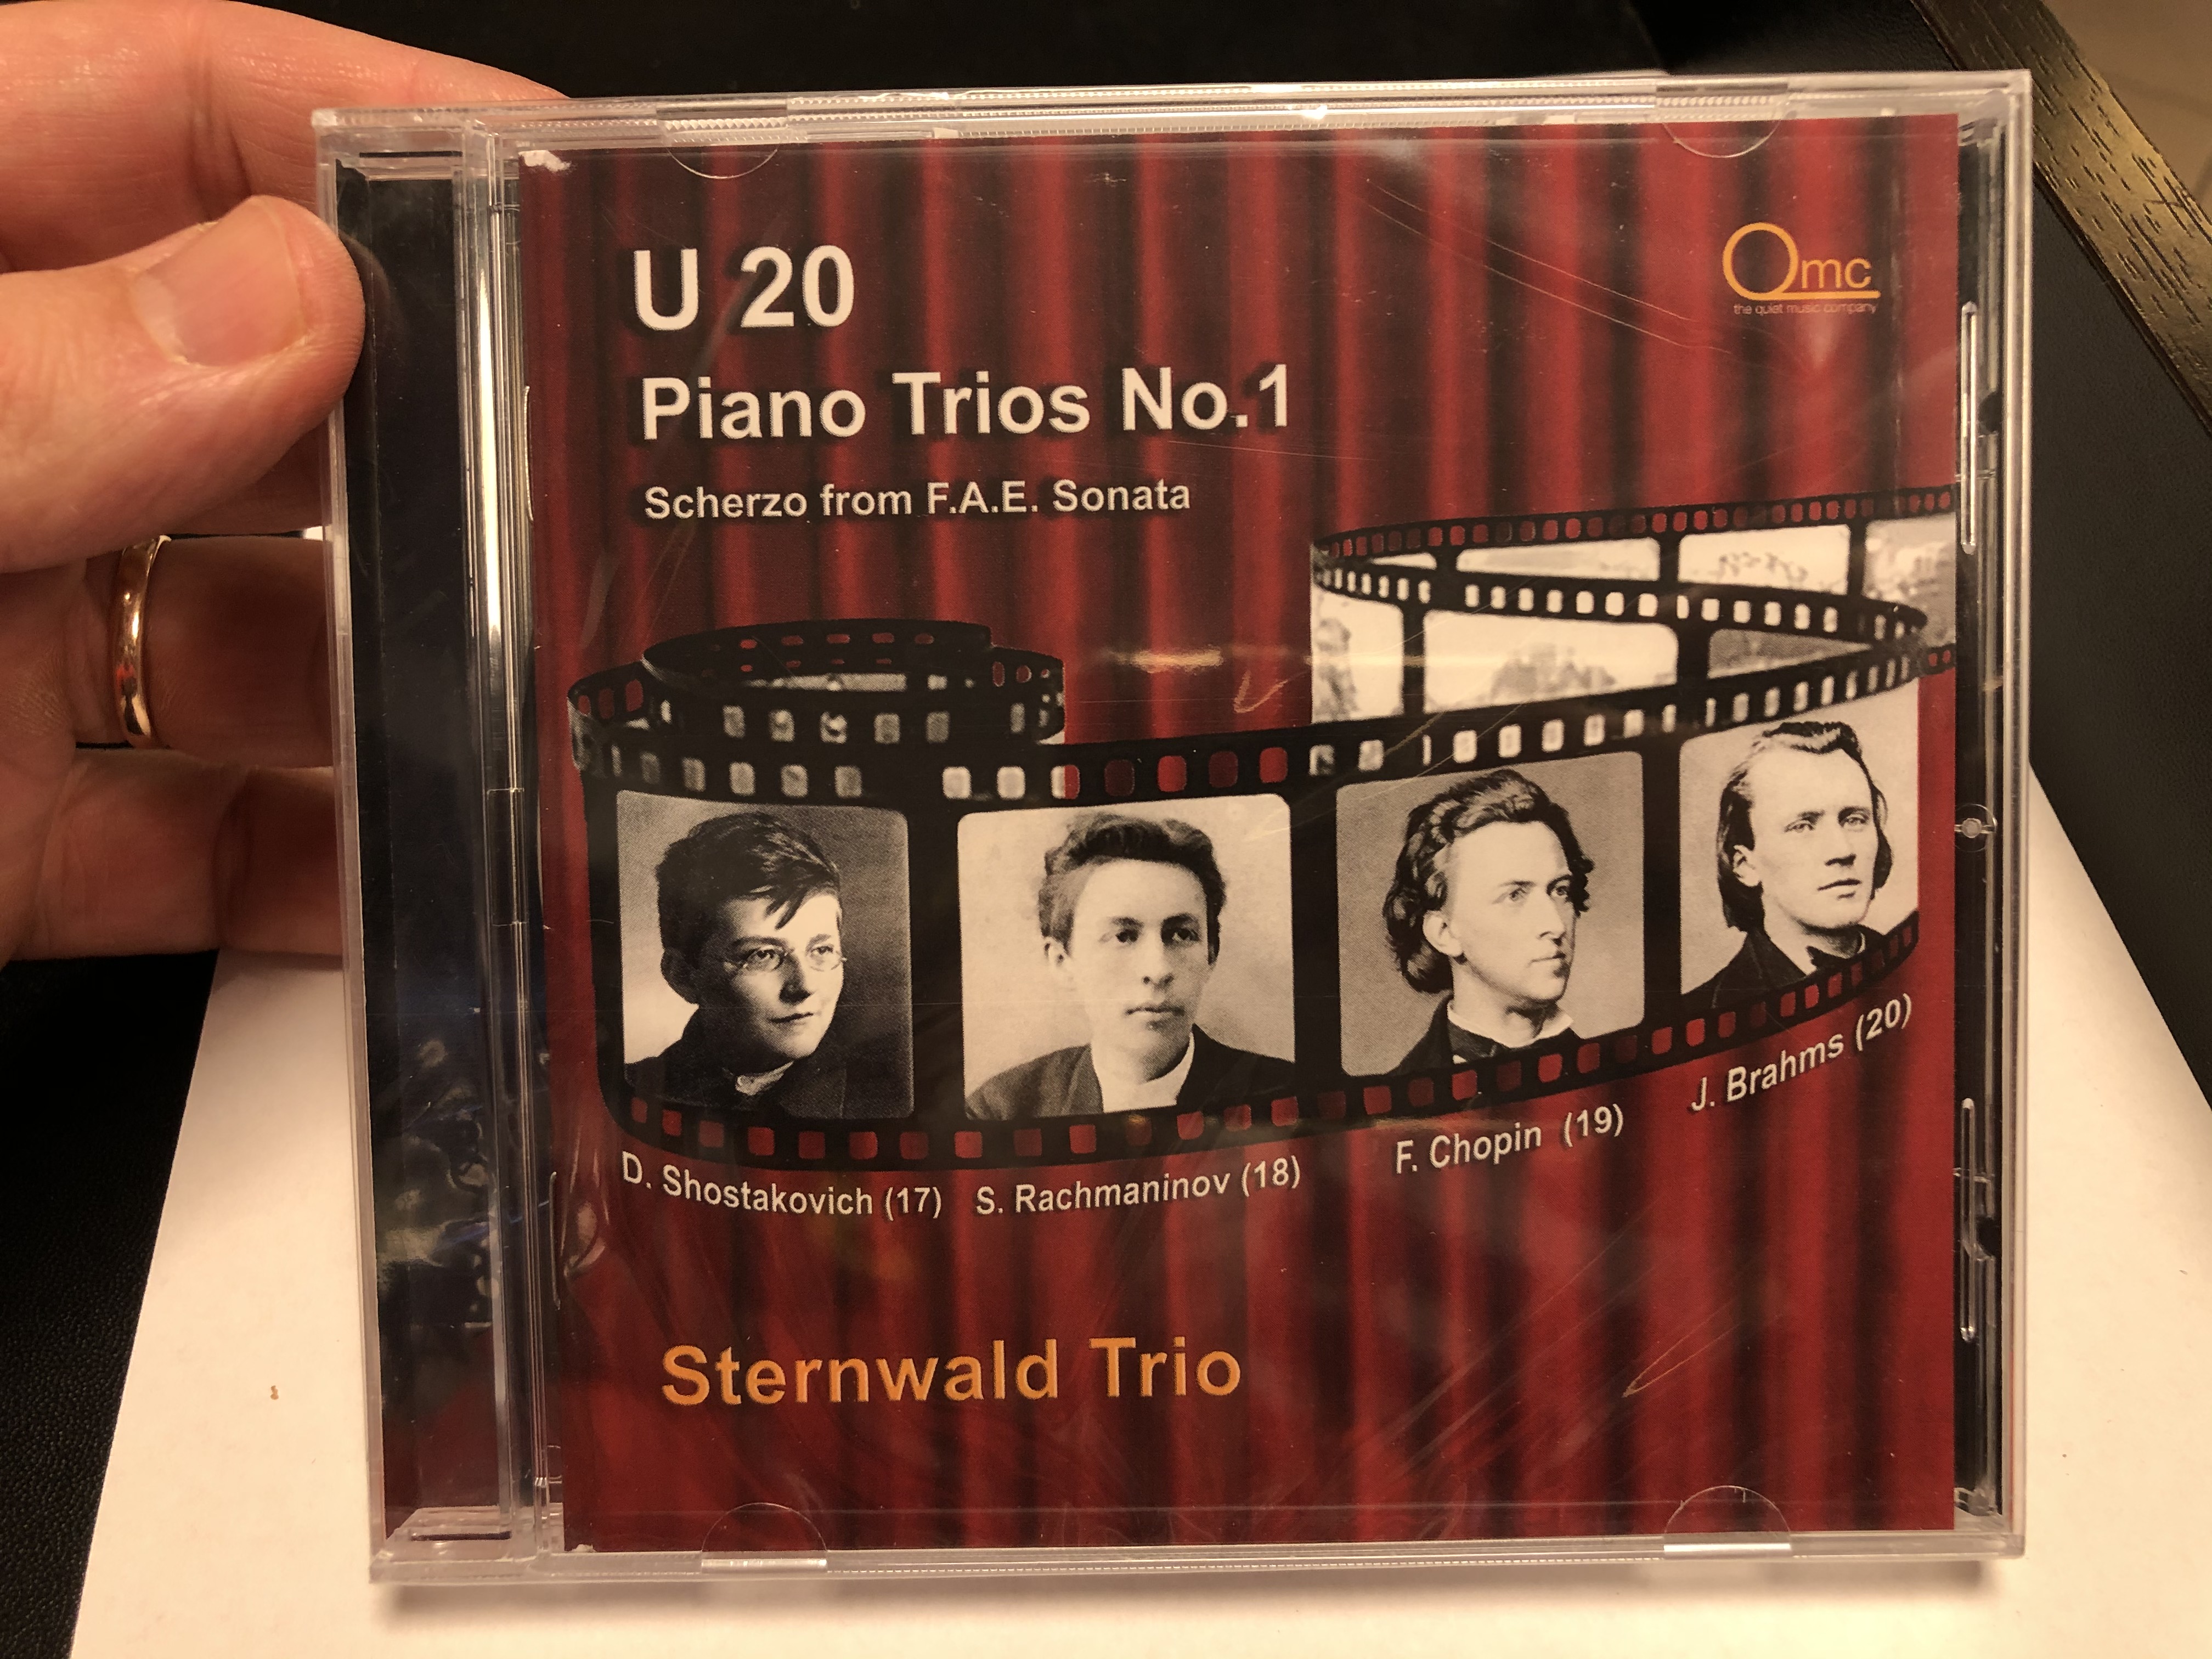 u-20-piano-trios-no.-1-scherzo-from-f.a.e.-sonata-sternwald-trio-d.-shostakovich-17-s.-rachmaninov-18-f.-chopin-19-j.-brahms-20-the-quiet-music-company-audio-cd-2020-qmc-020.jpg